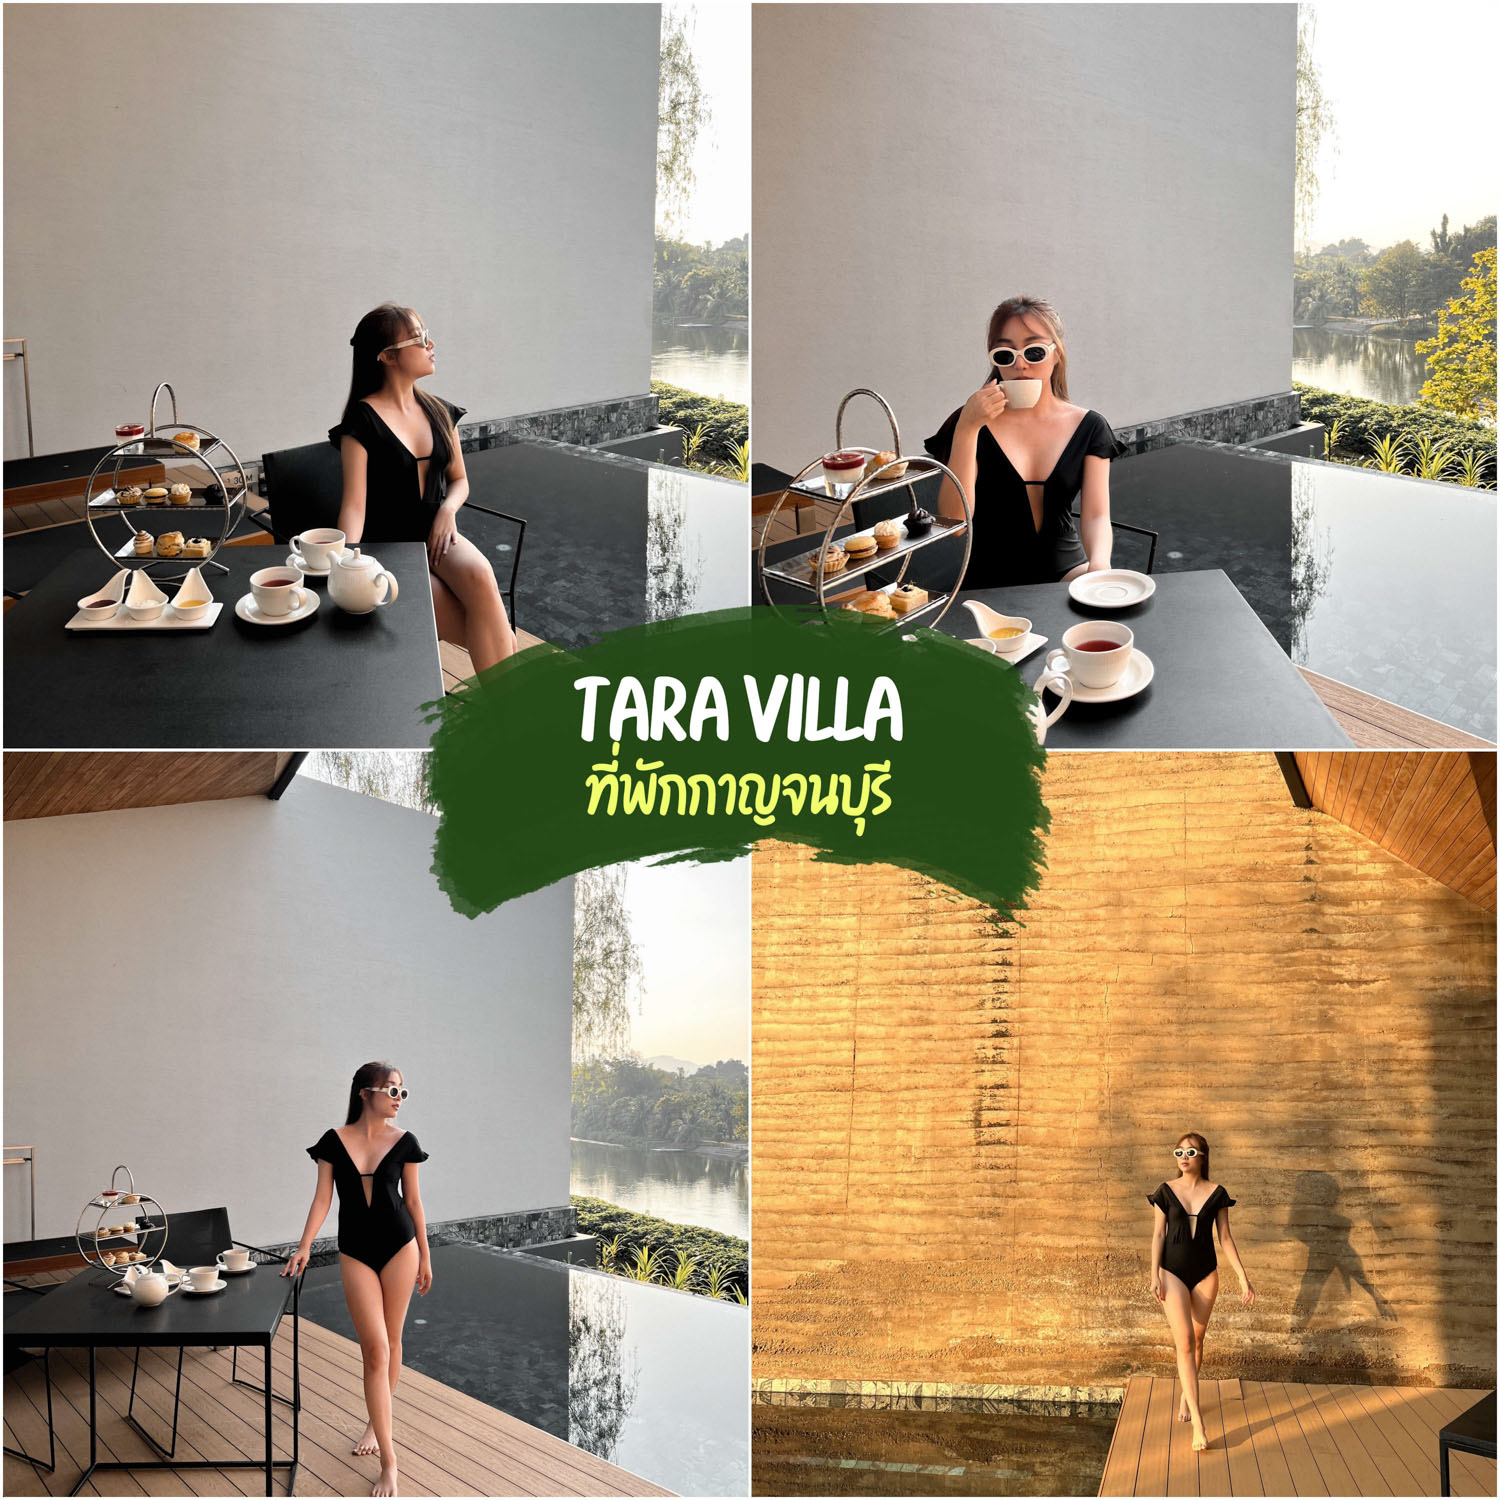 Tara villa ที่พักกาญจนบุรี ส่วนตัวสวยๆ บรรยากาศดี อากาศสดชื่นน